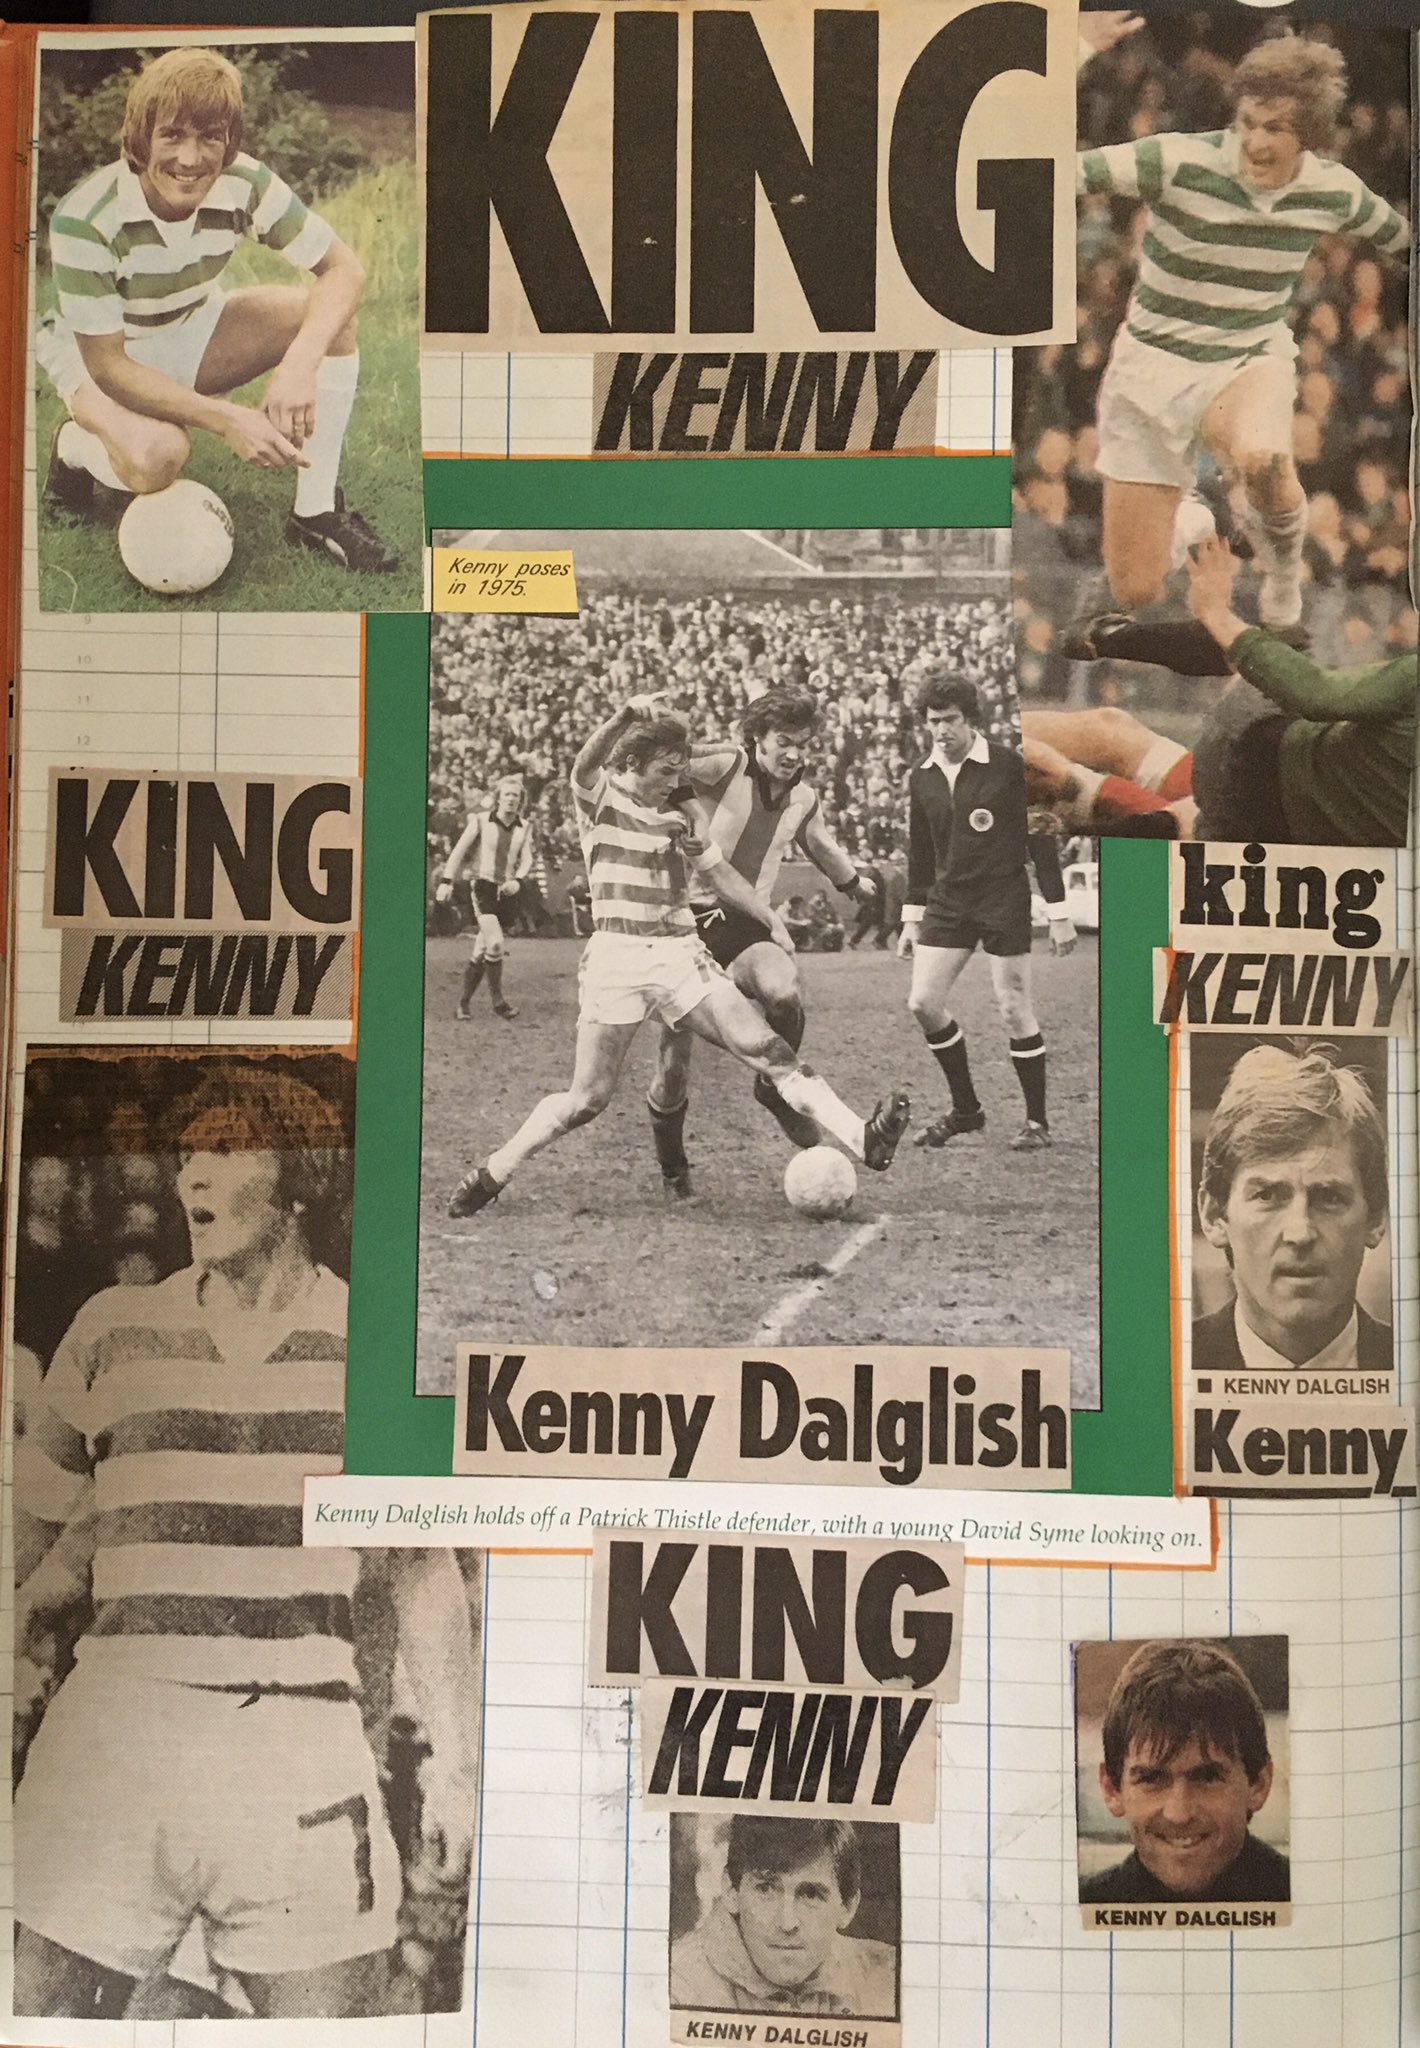 Happy birthday to Kenny Dalglish. 